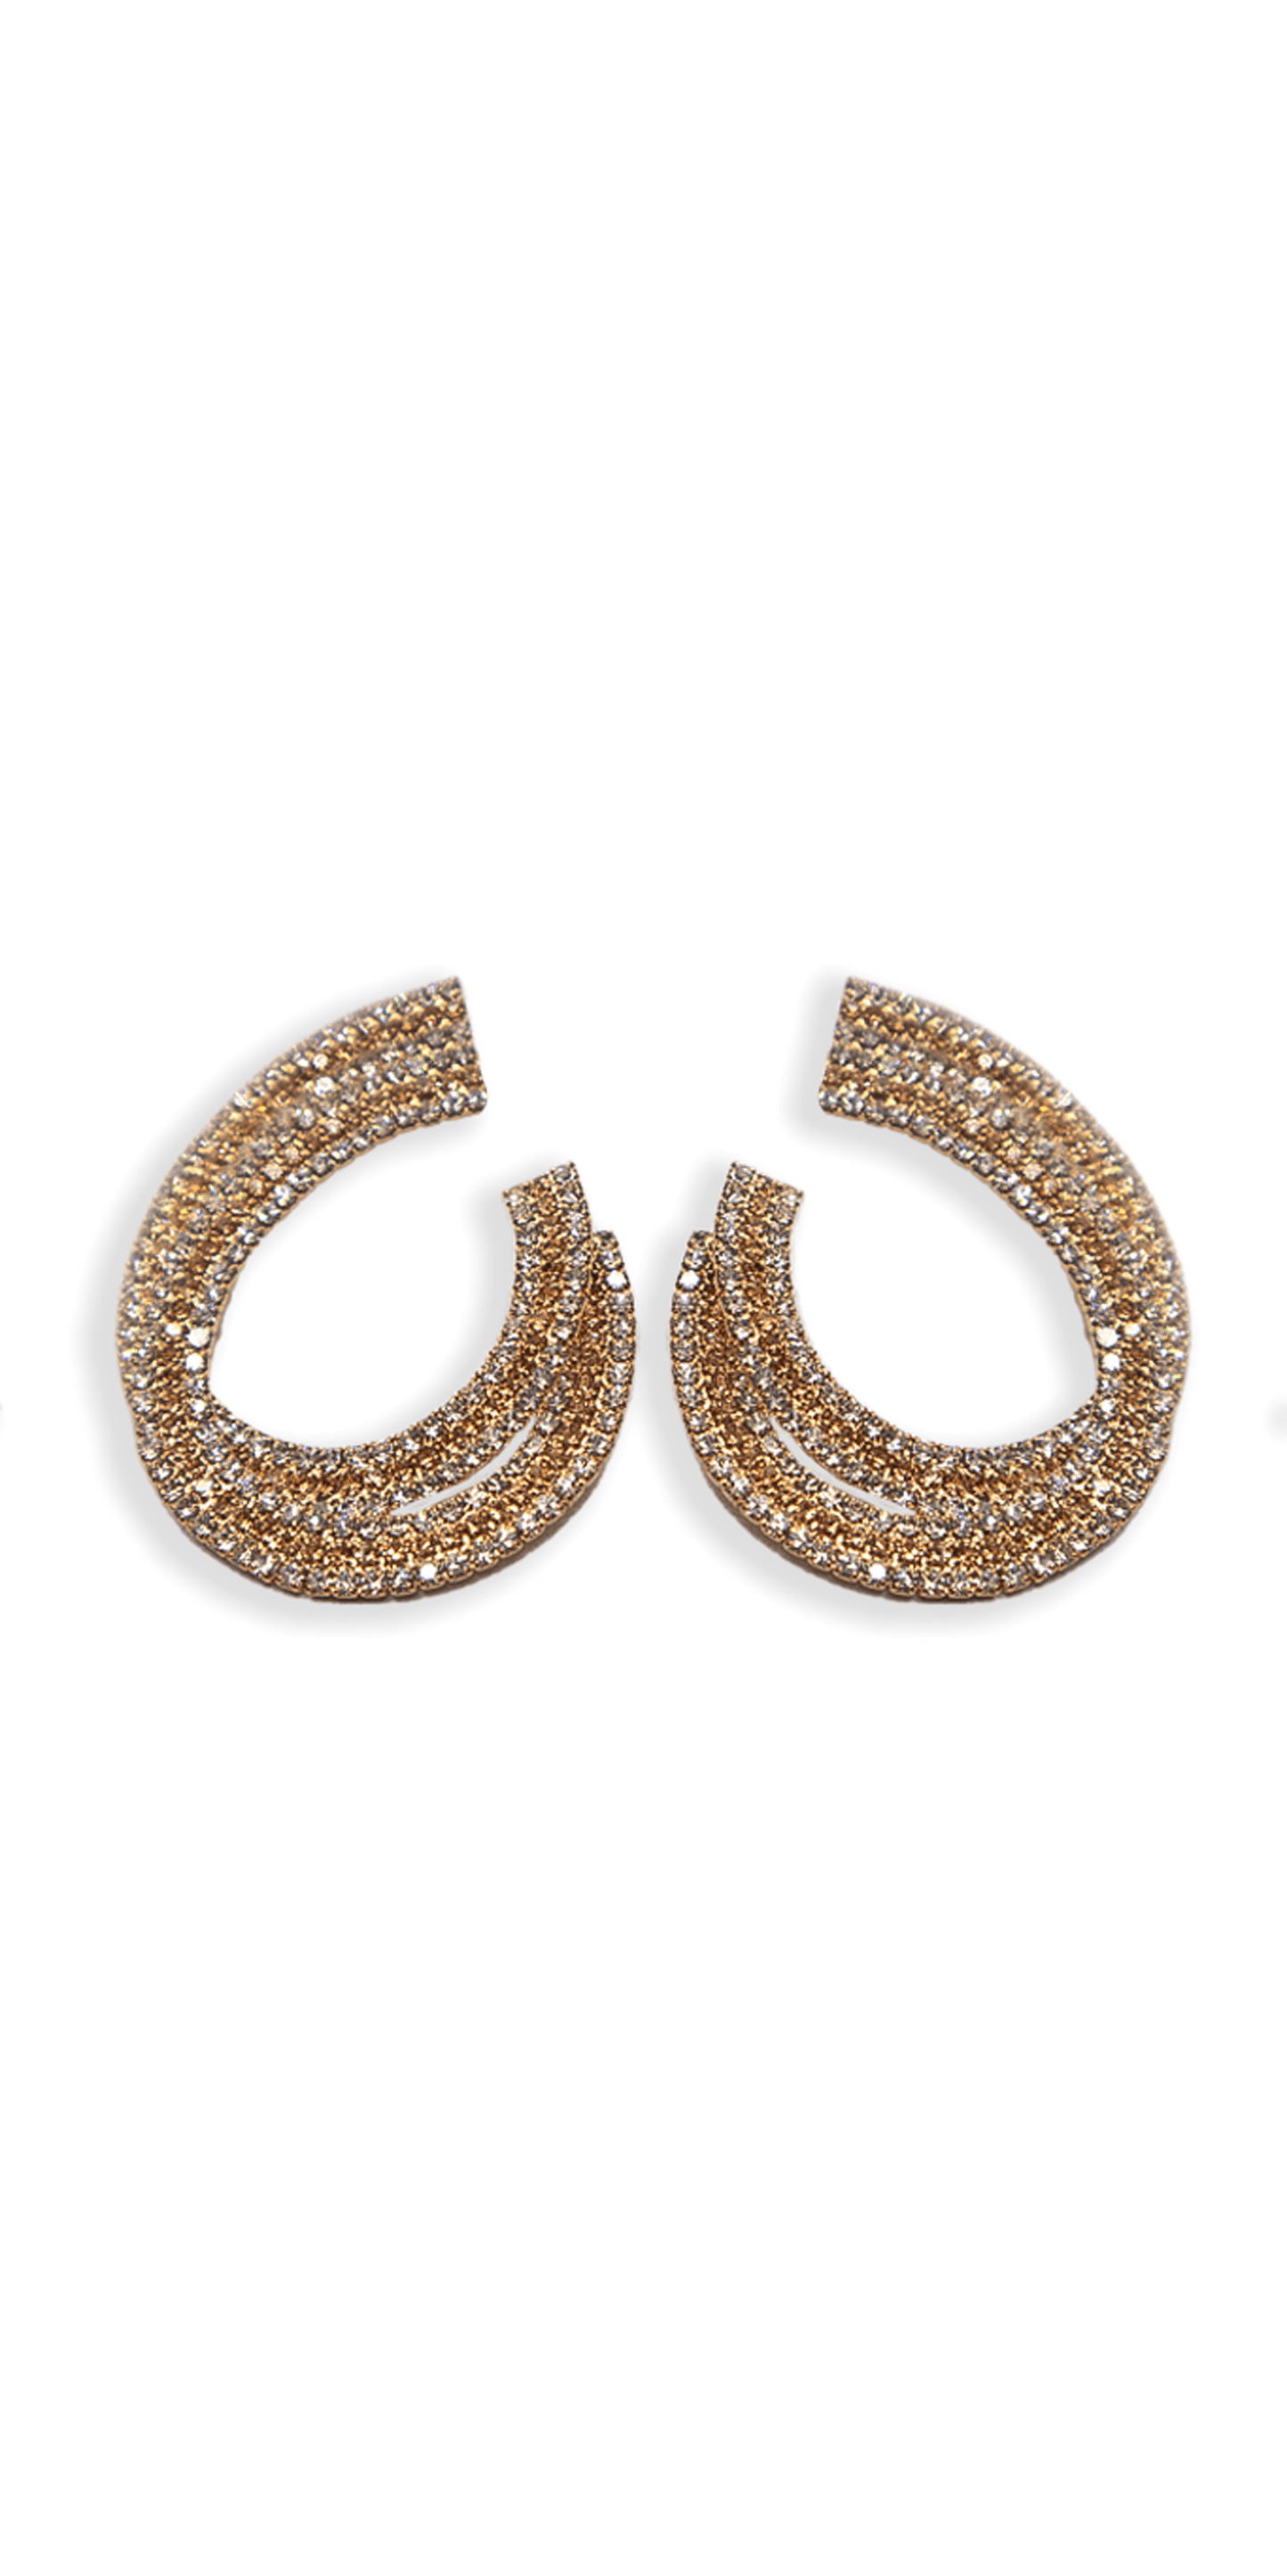 Camille La Vie Crystal Double Swirl Rhinestone Earrings OS / gold